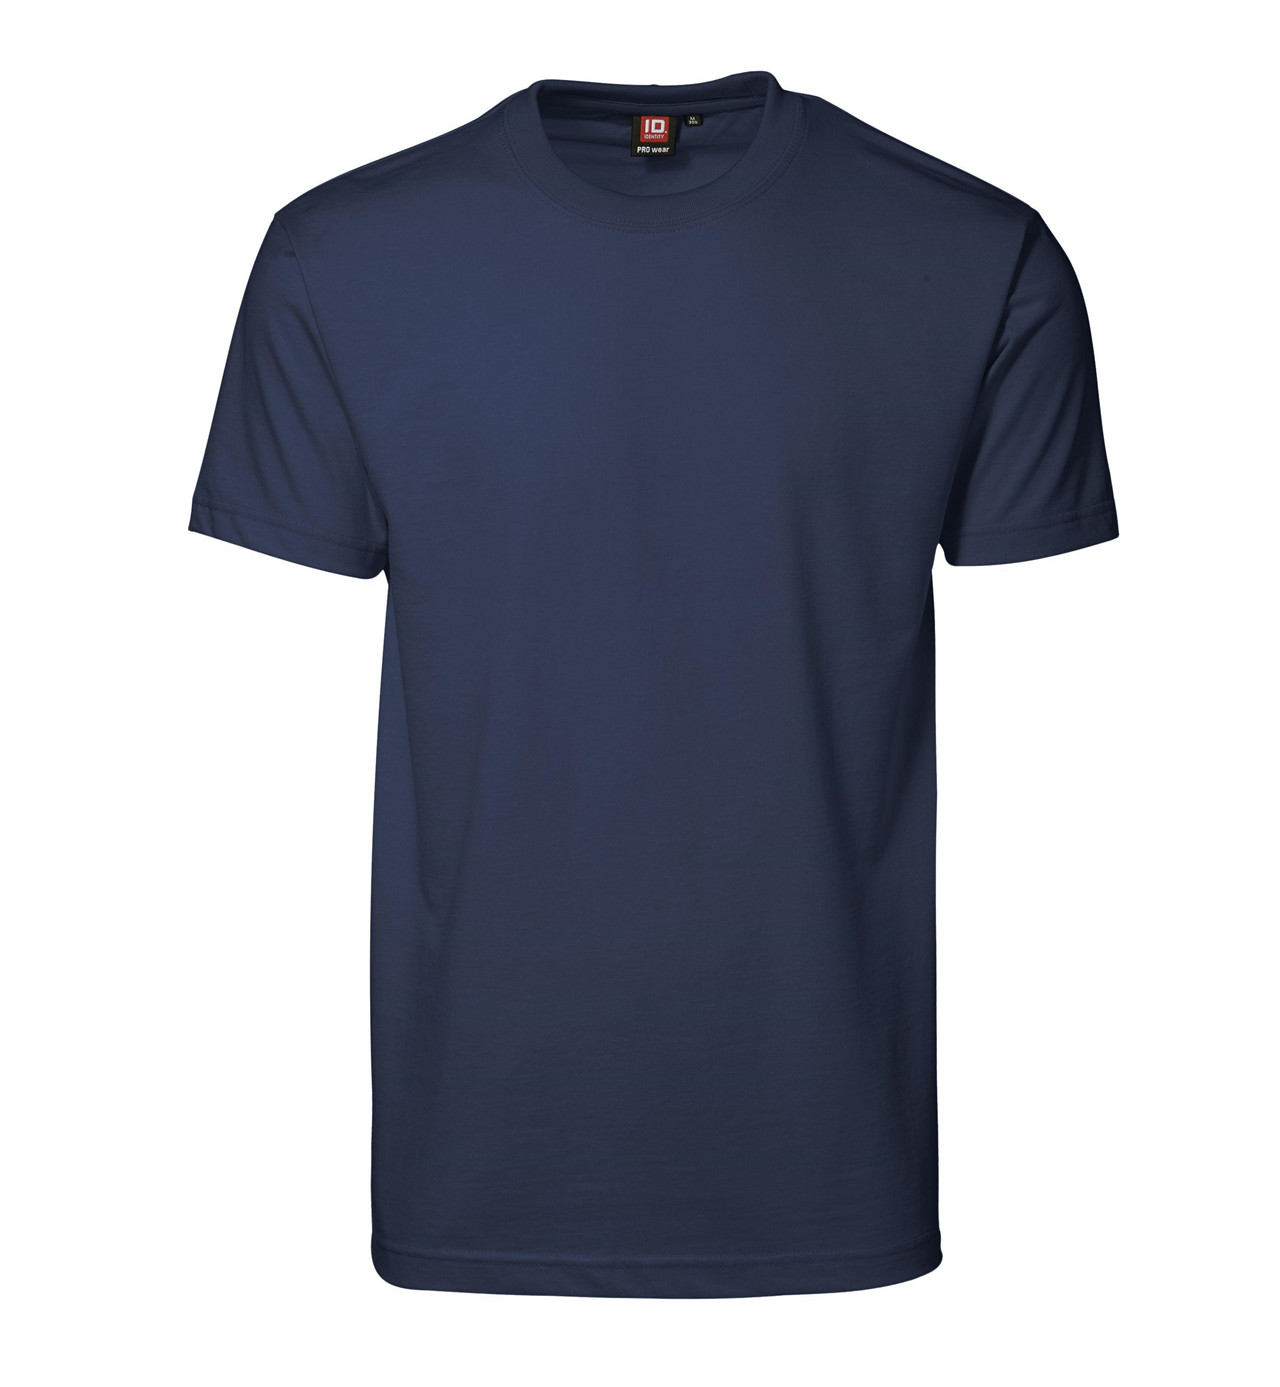 ID PRO Wear T-shirt til Herre (Navy, XL)